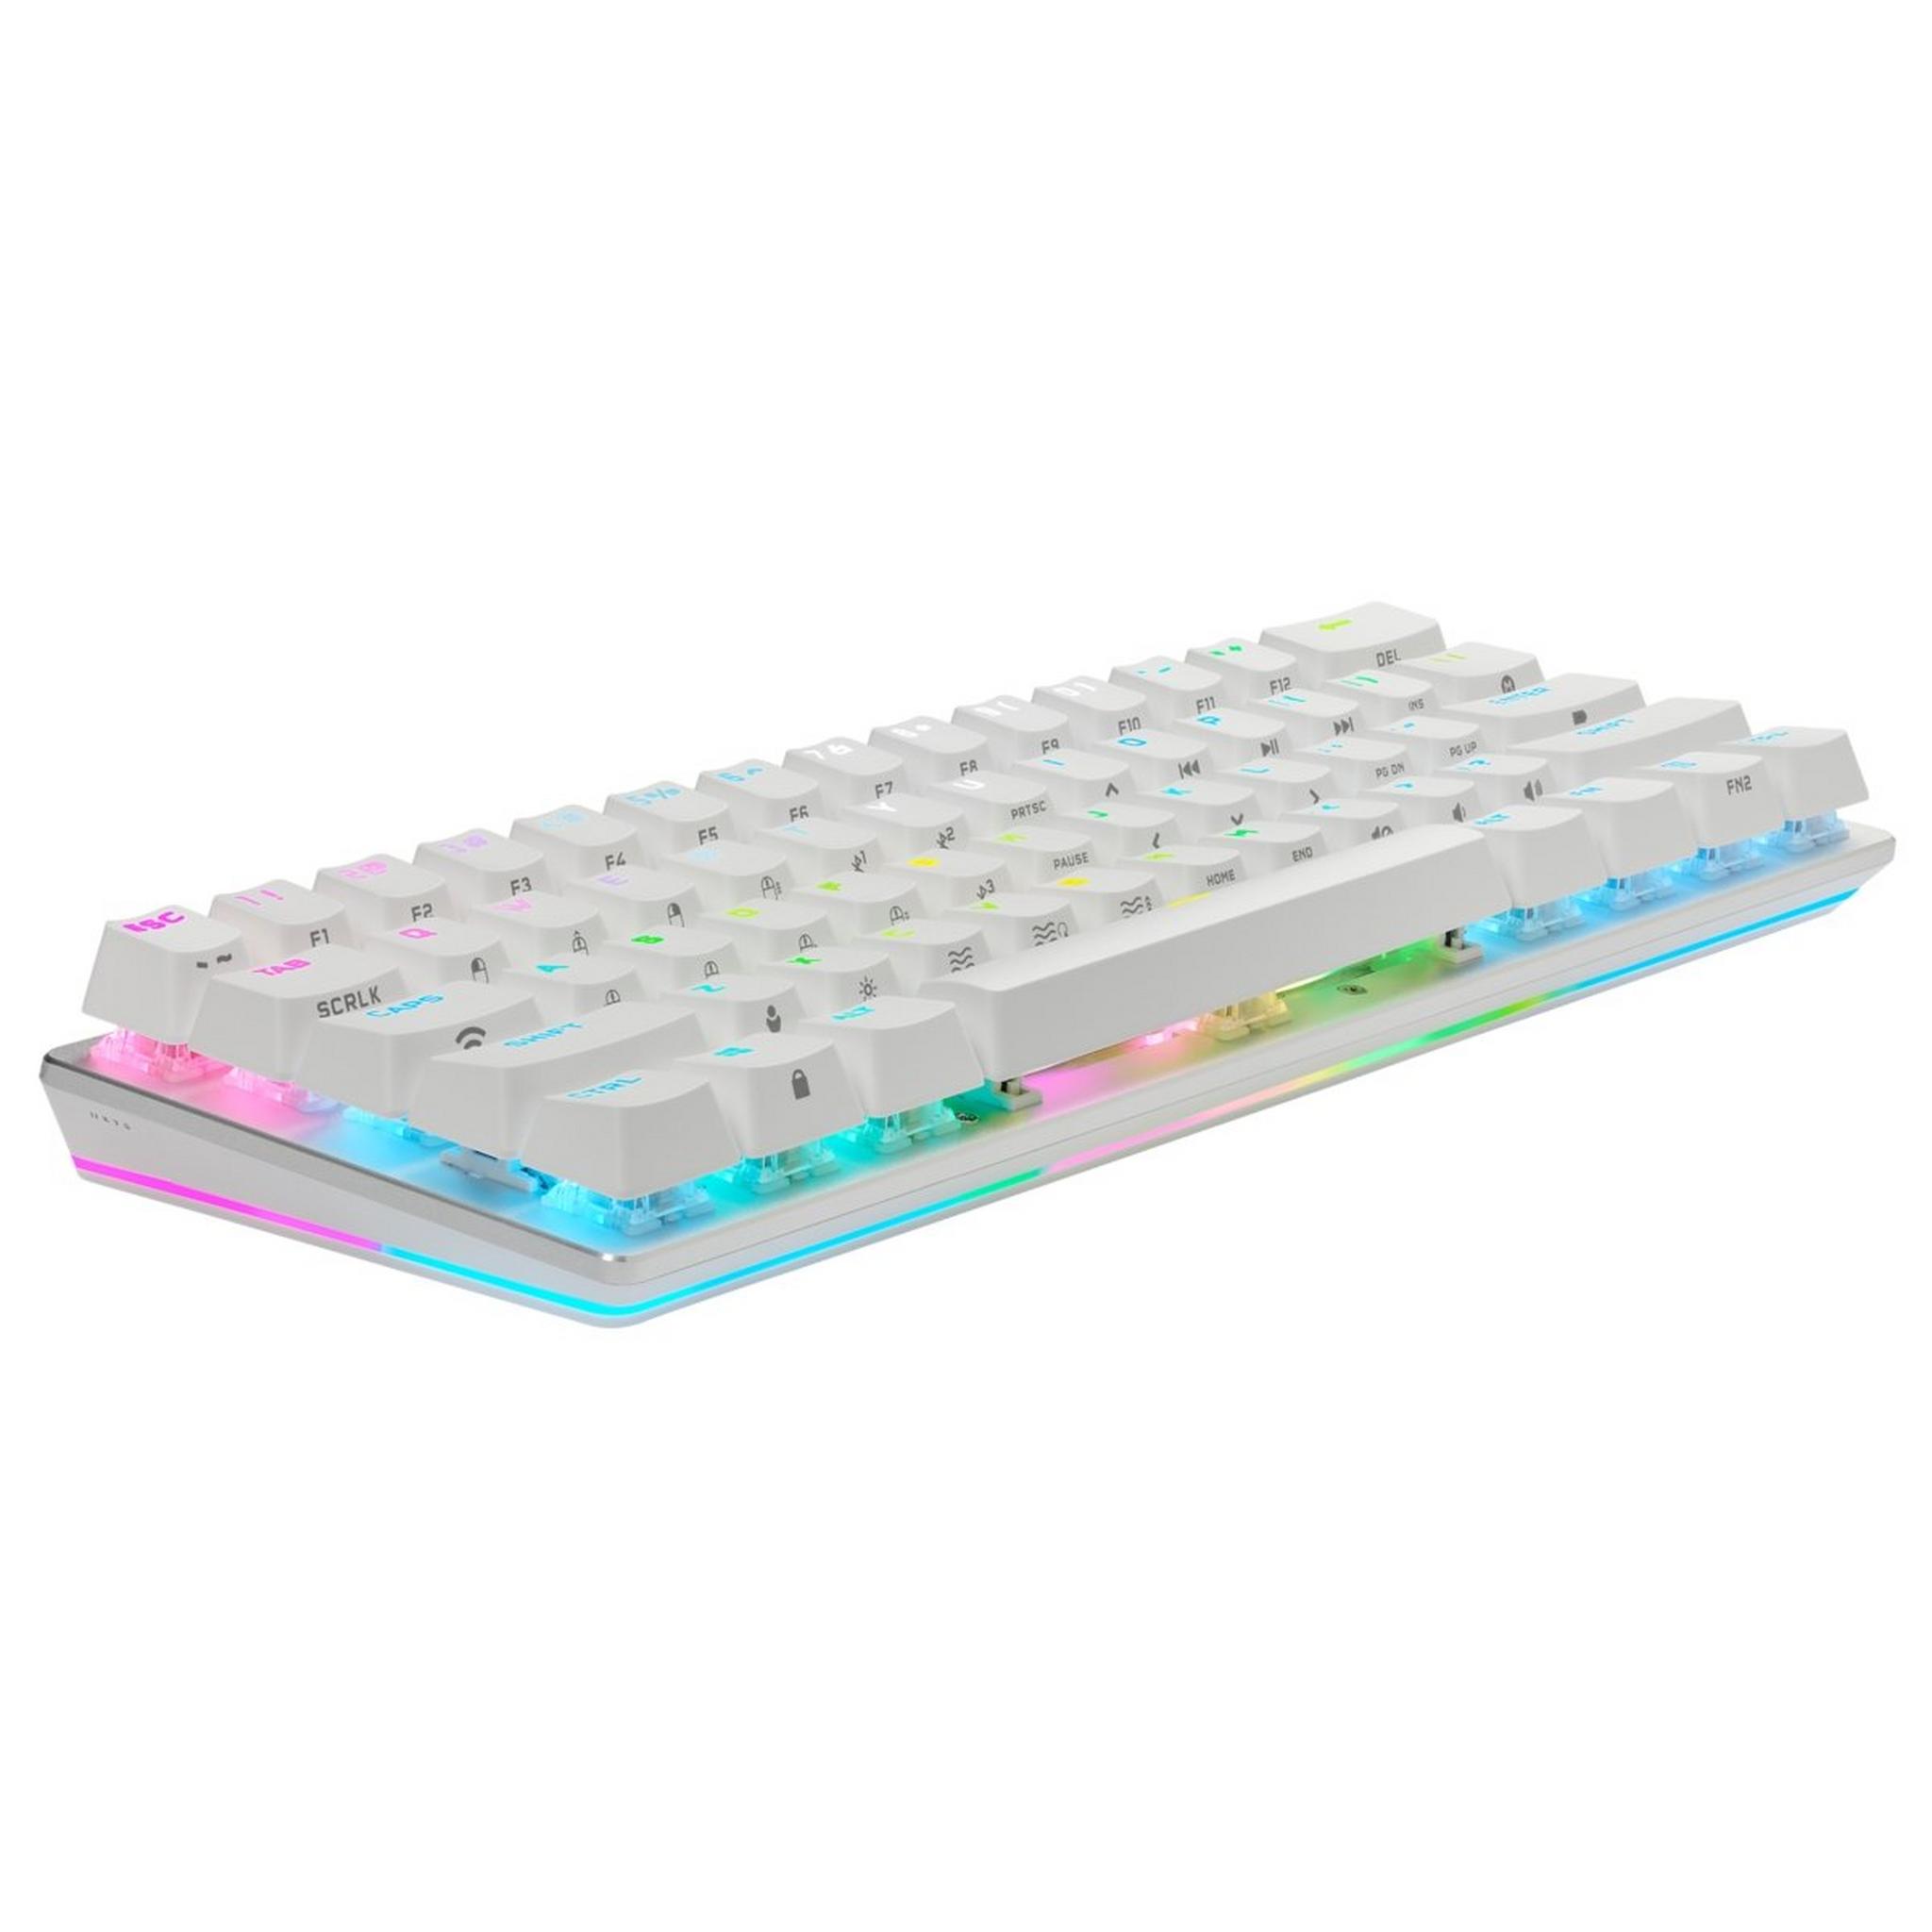 Corsair K70 Pro Mini Wireless RGB Keyboard - White